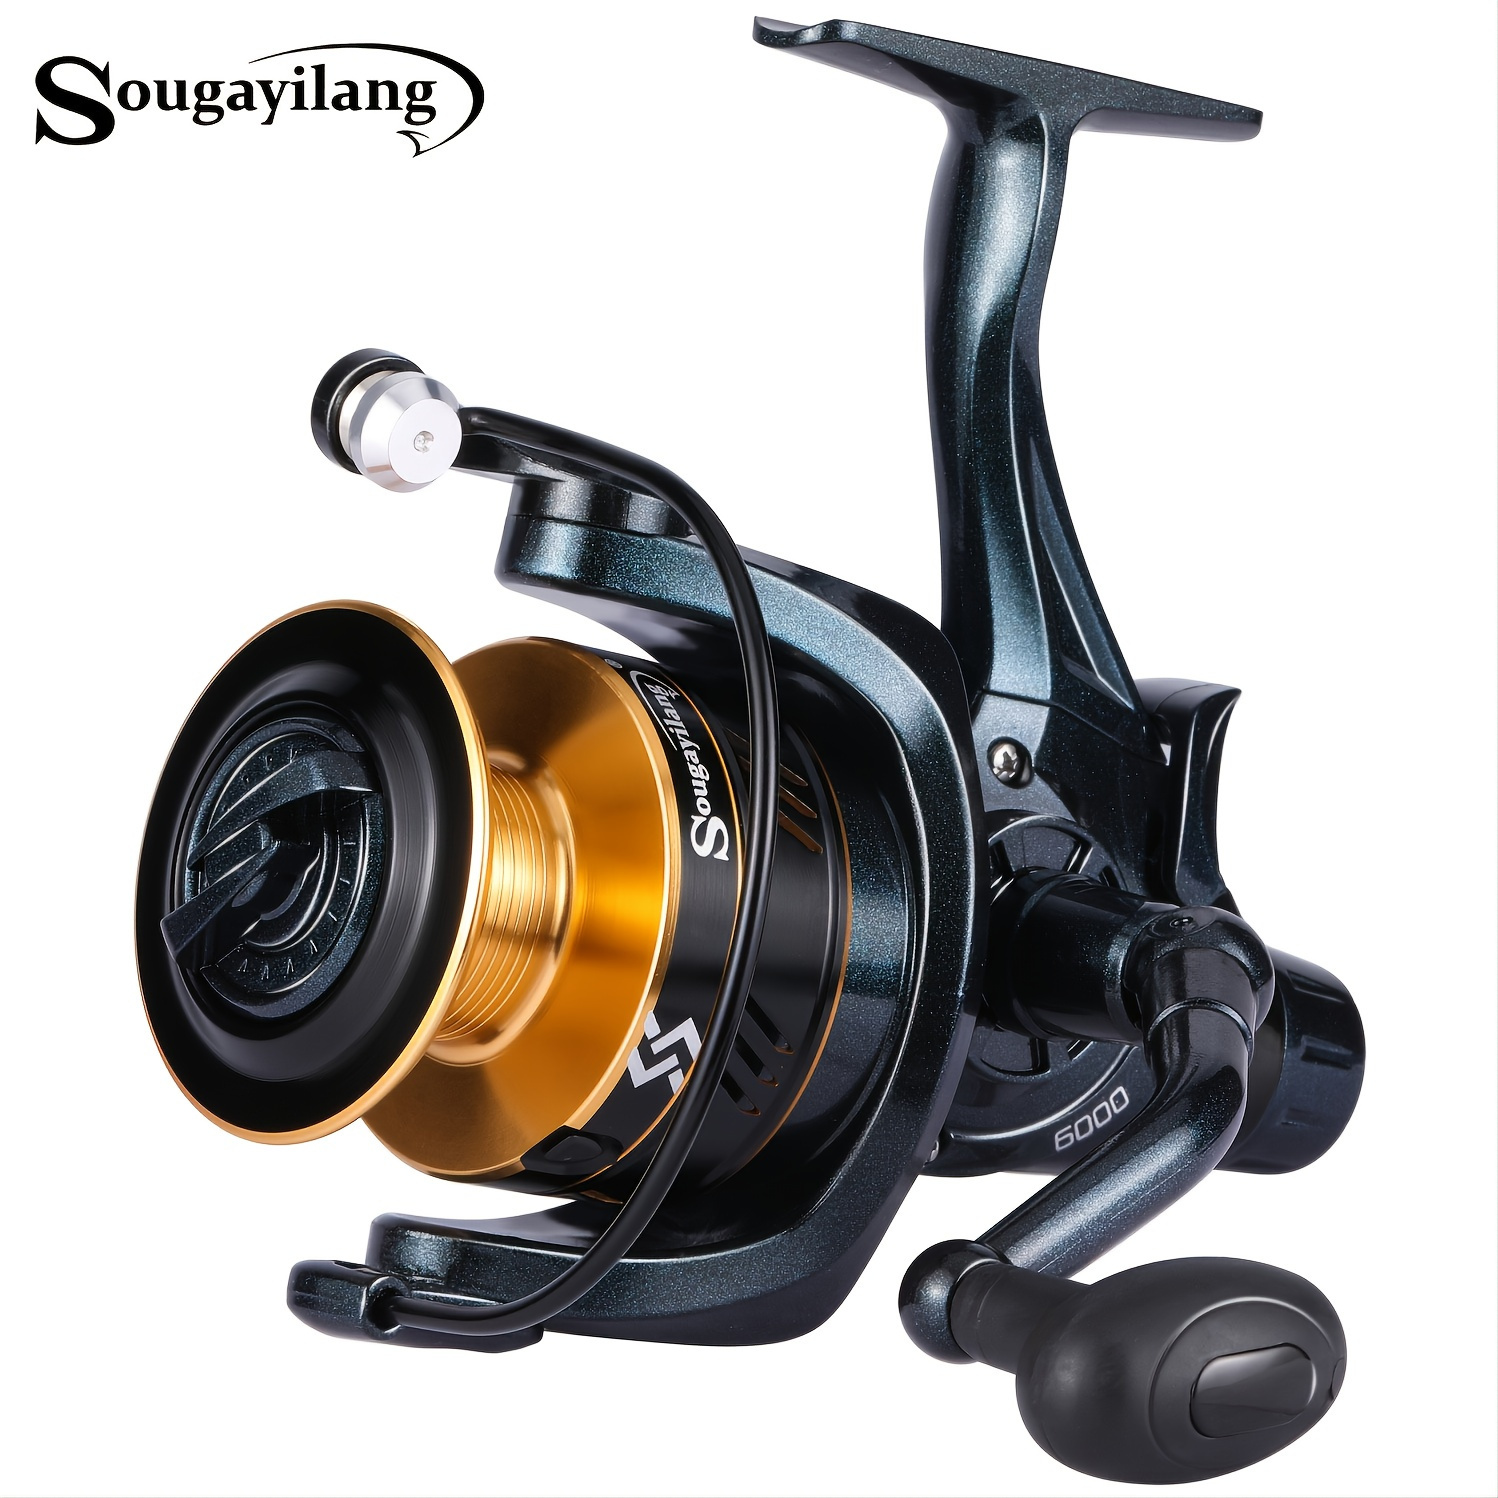 

Sougayilang Carp Fishing Reel: 13+1bb Spinning Reel With 30lb Drag Power Wheel For Maximum Fishing Performance